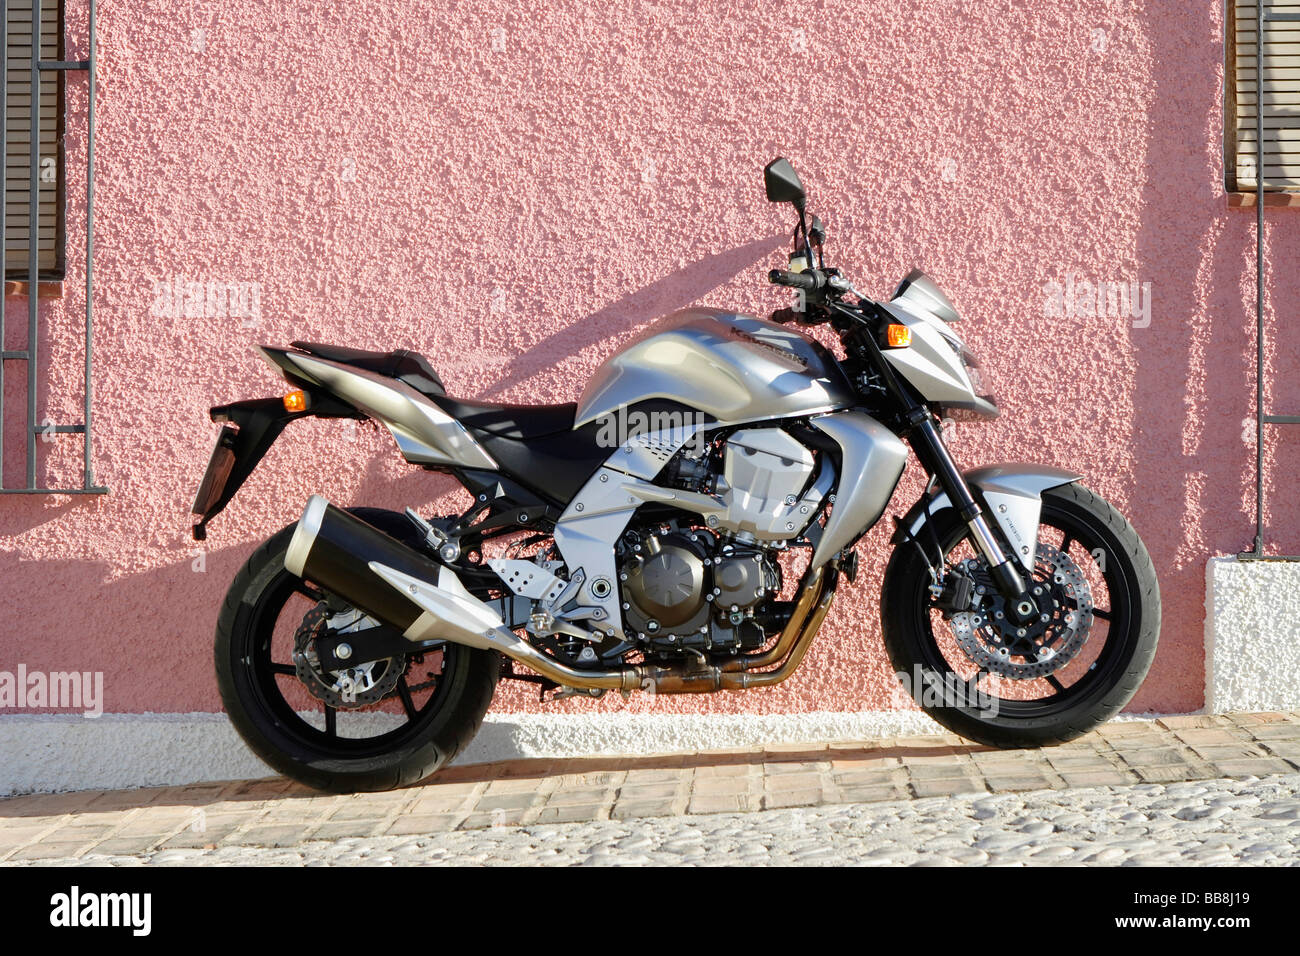 Kawasaki Z750 motorcycle Stock Photo - Alamy